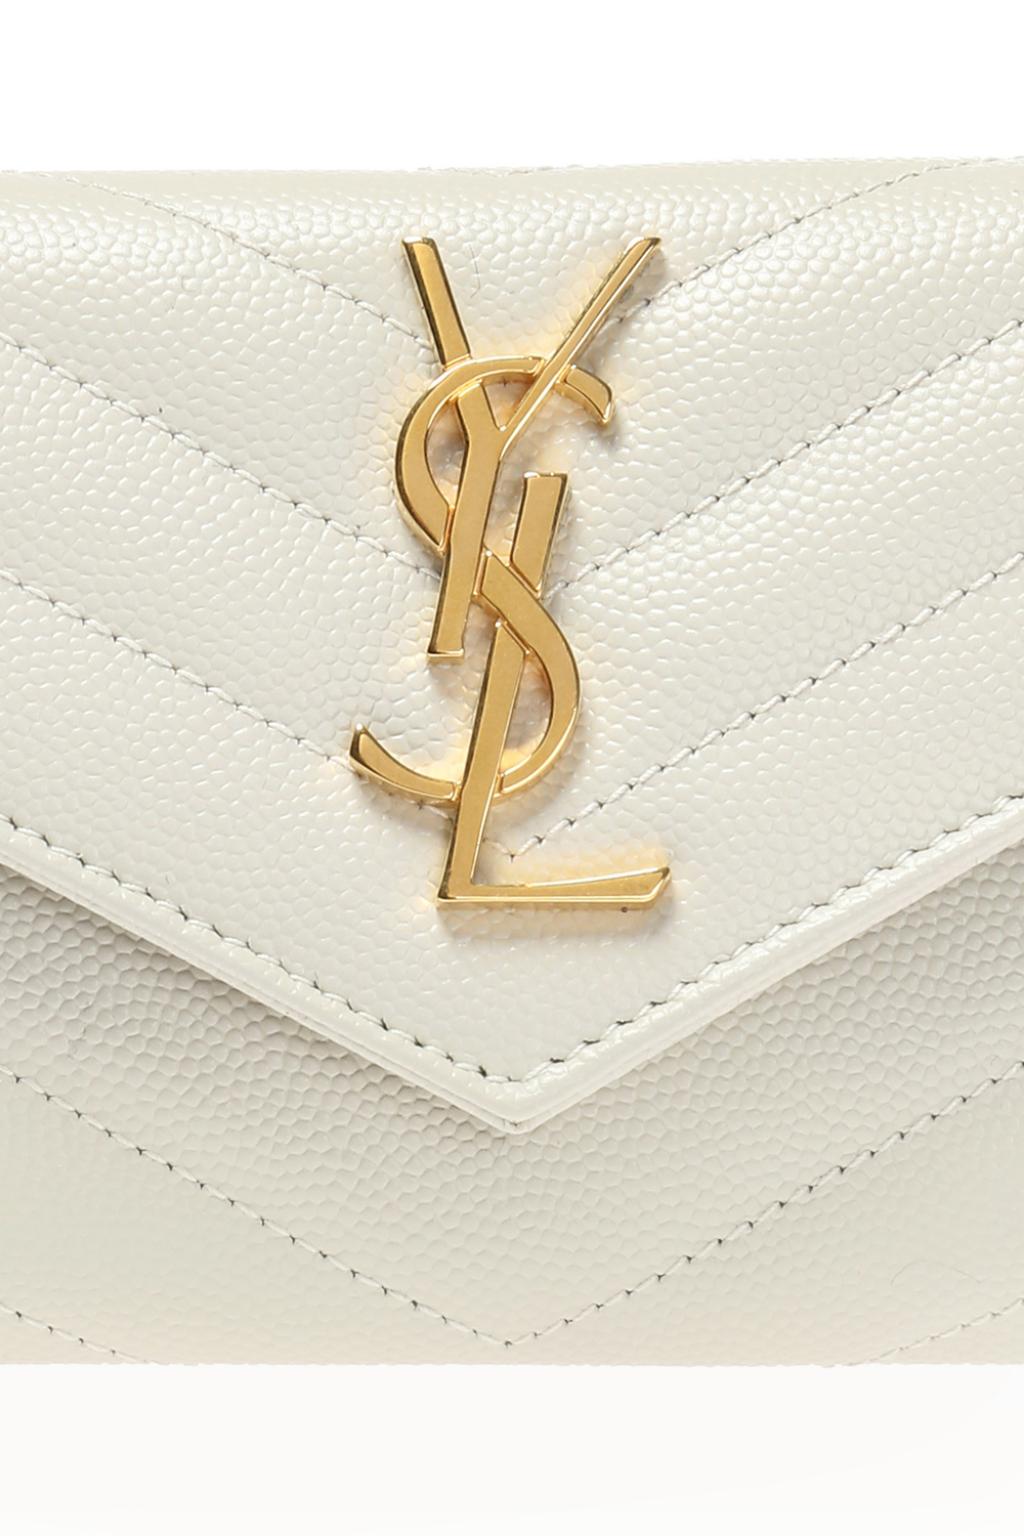 Saint Laurent beige Quilted Leather Card Case